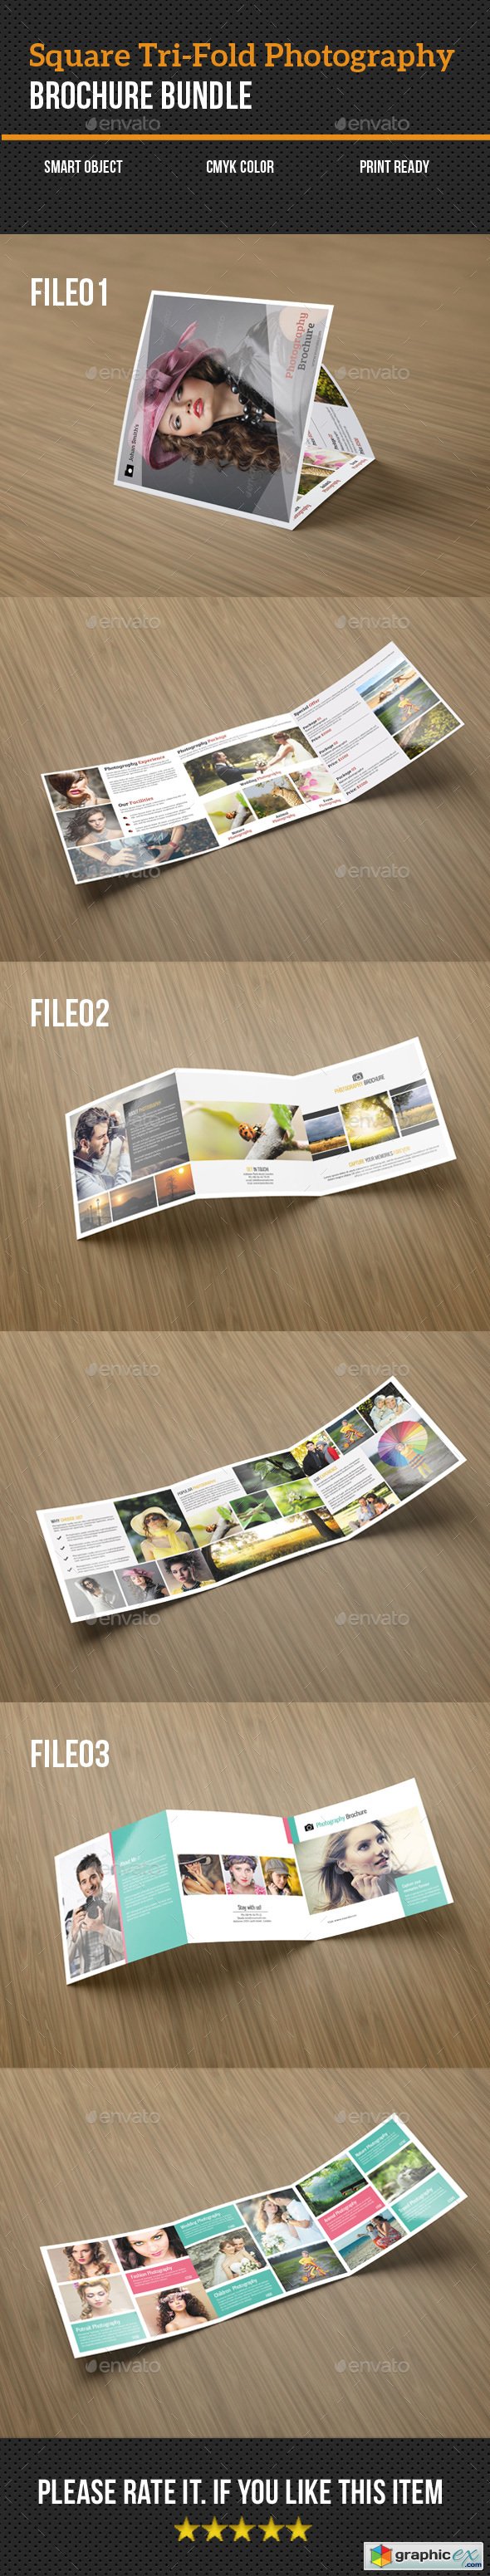 Square Tri-Fold Photography Brochure Bundle